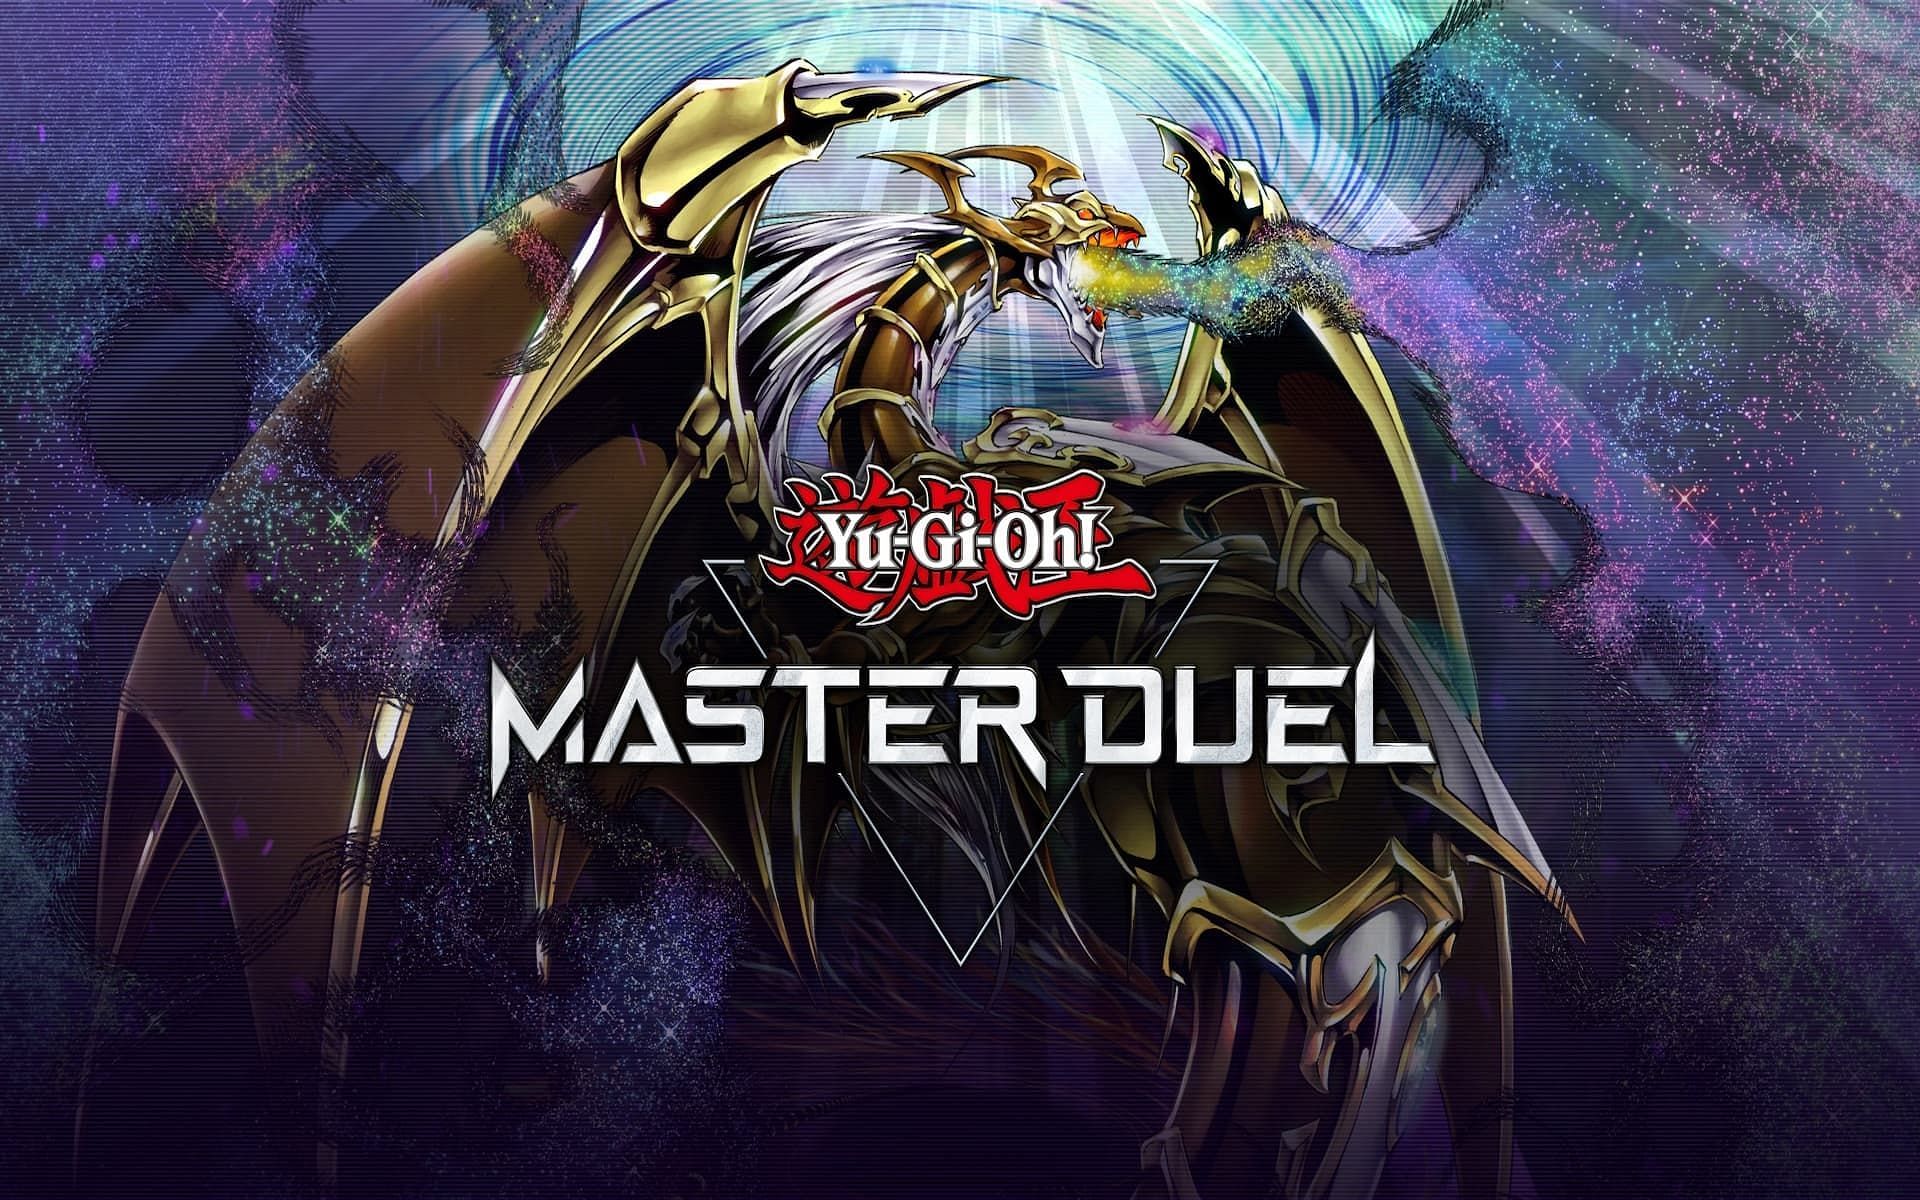 The cover image for Yu-Gi-Oh! Master Duel (Image via Konami)